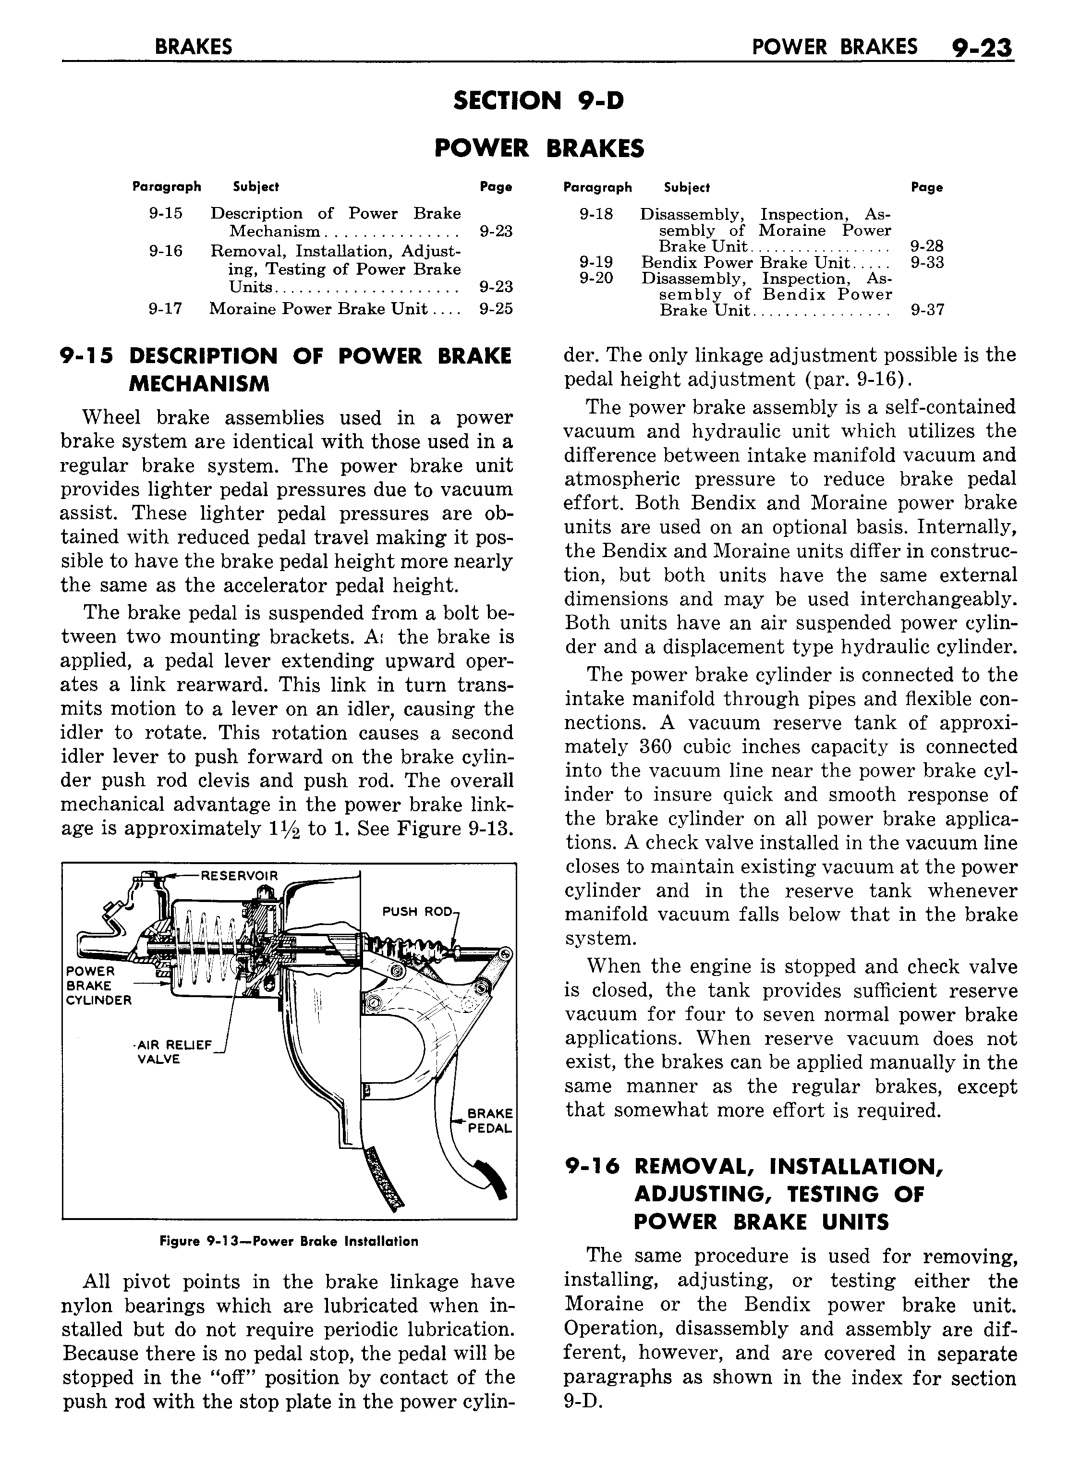 n_10 1957 Buick Shop Manual - Brakes-023-023.jpg